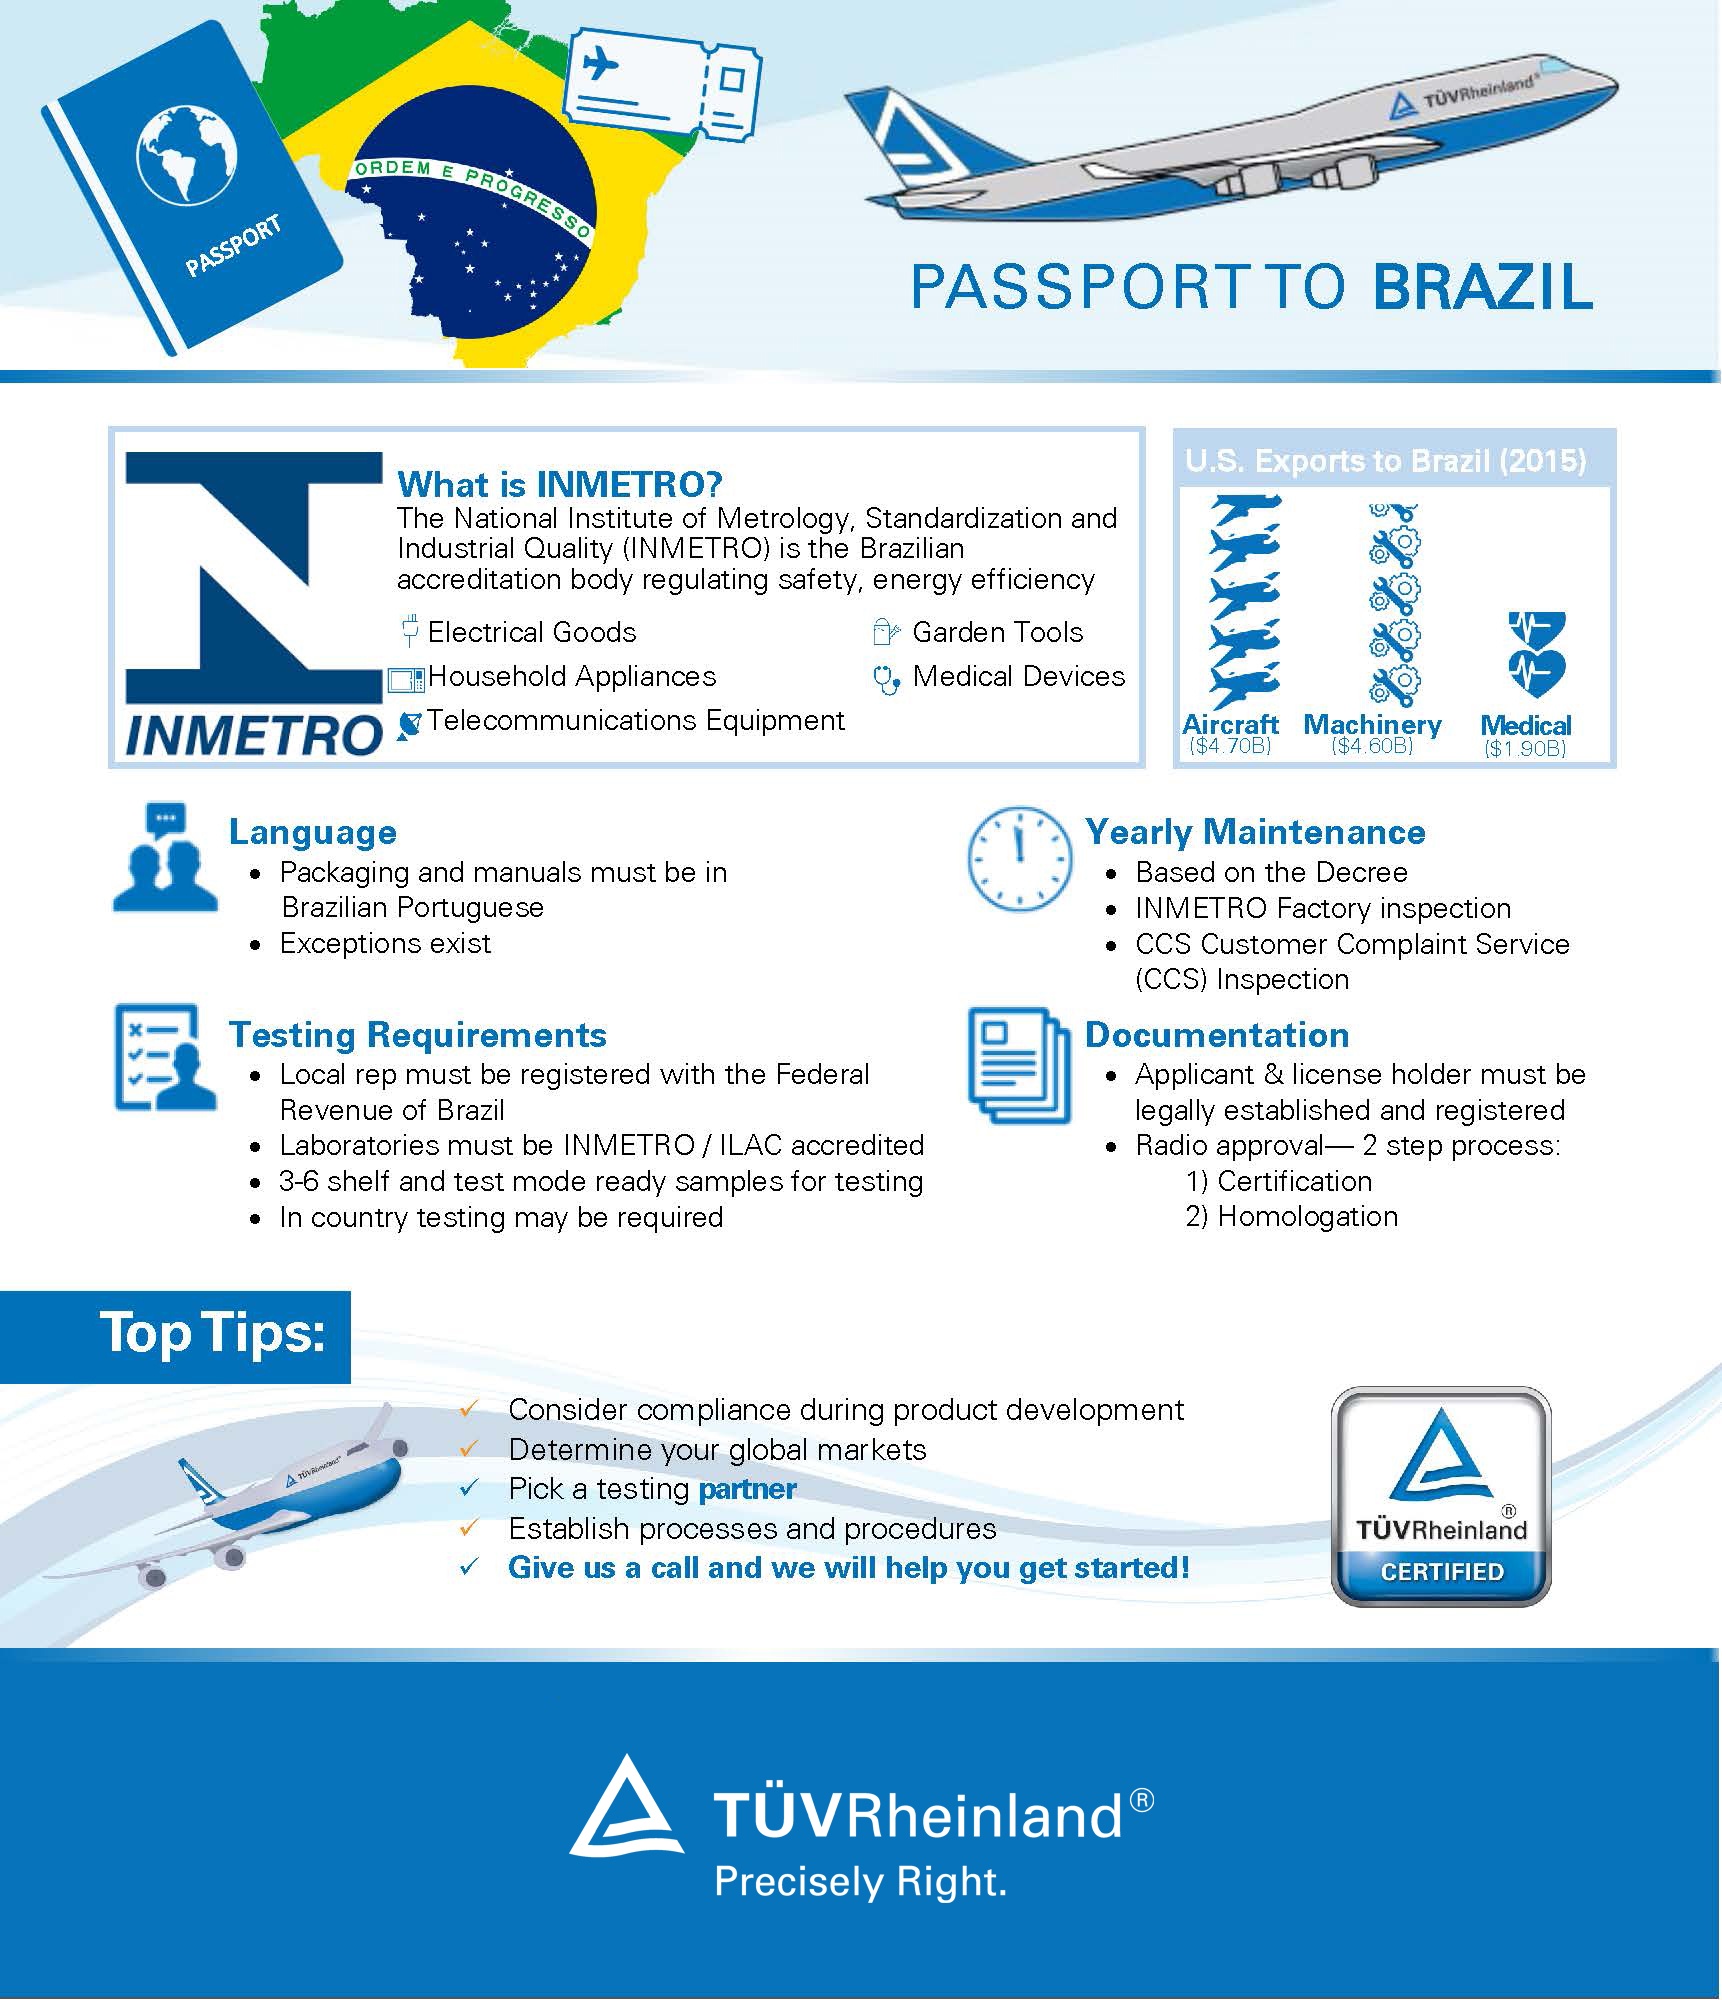 TR_Passport to Brazil_Infographic